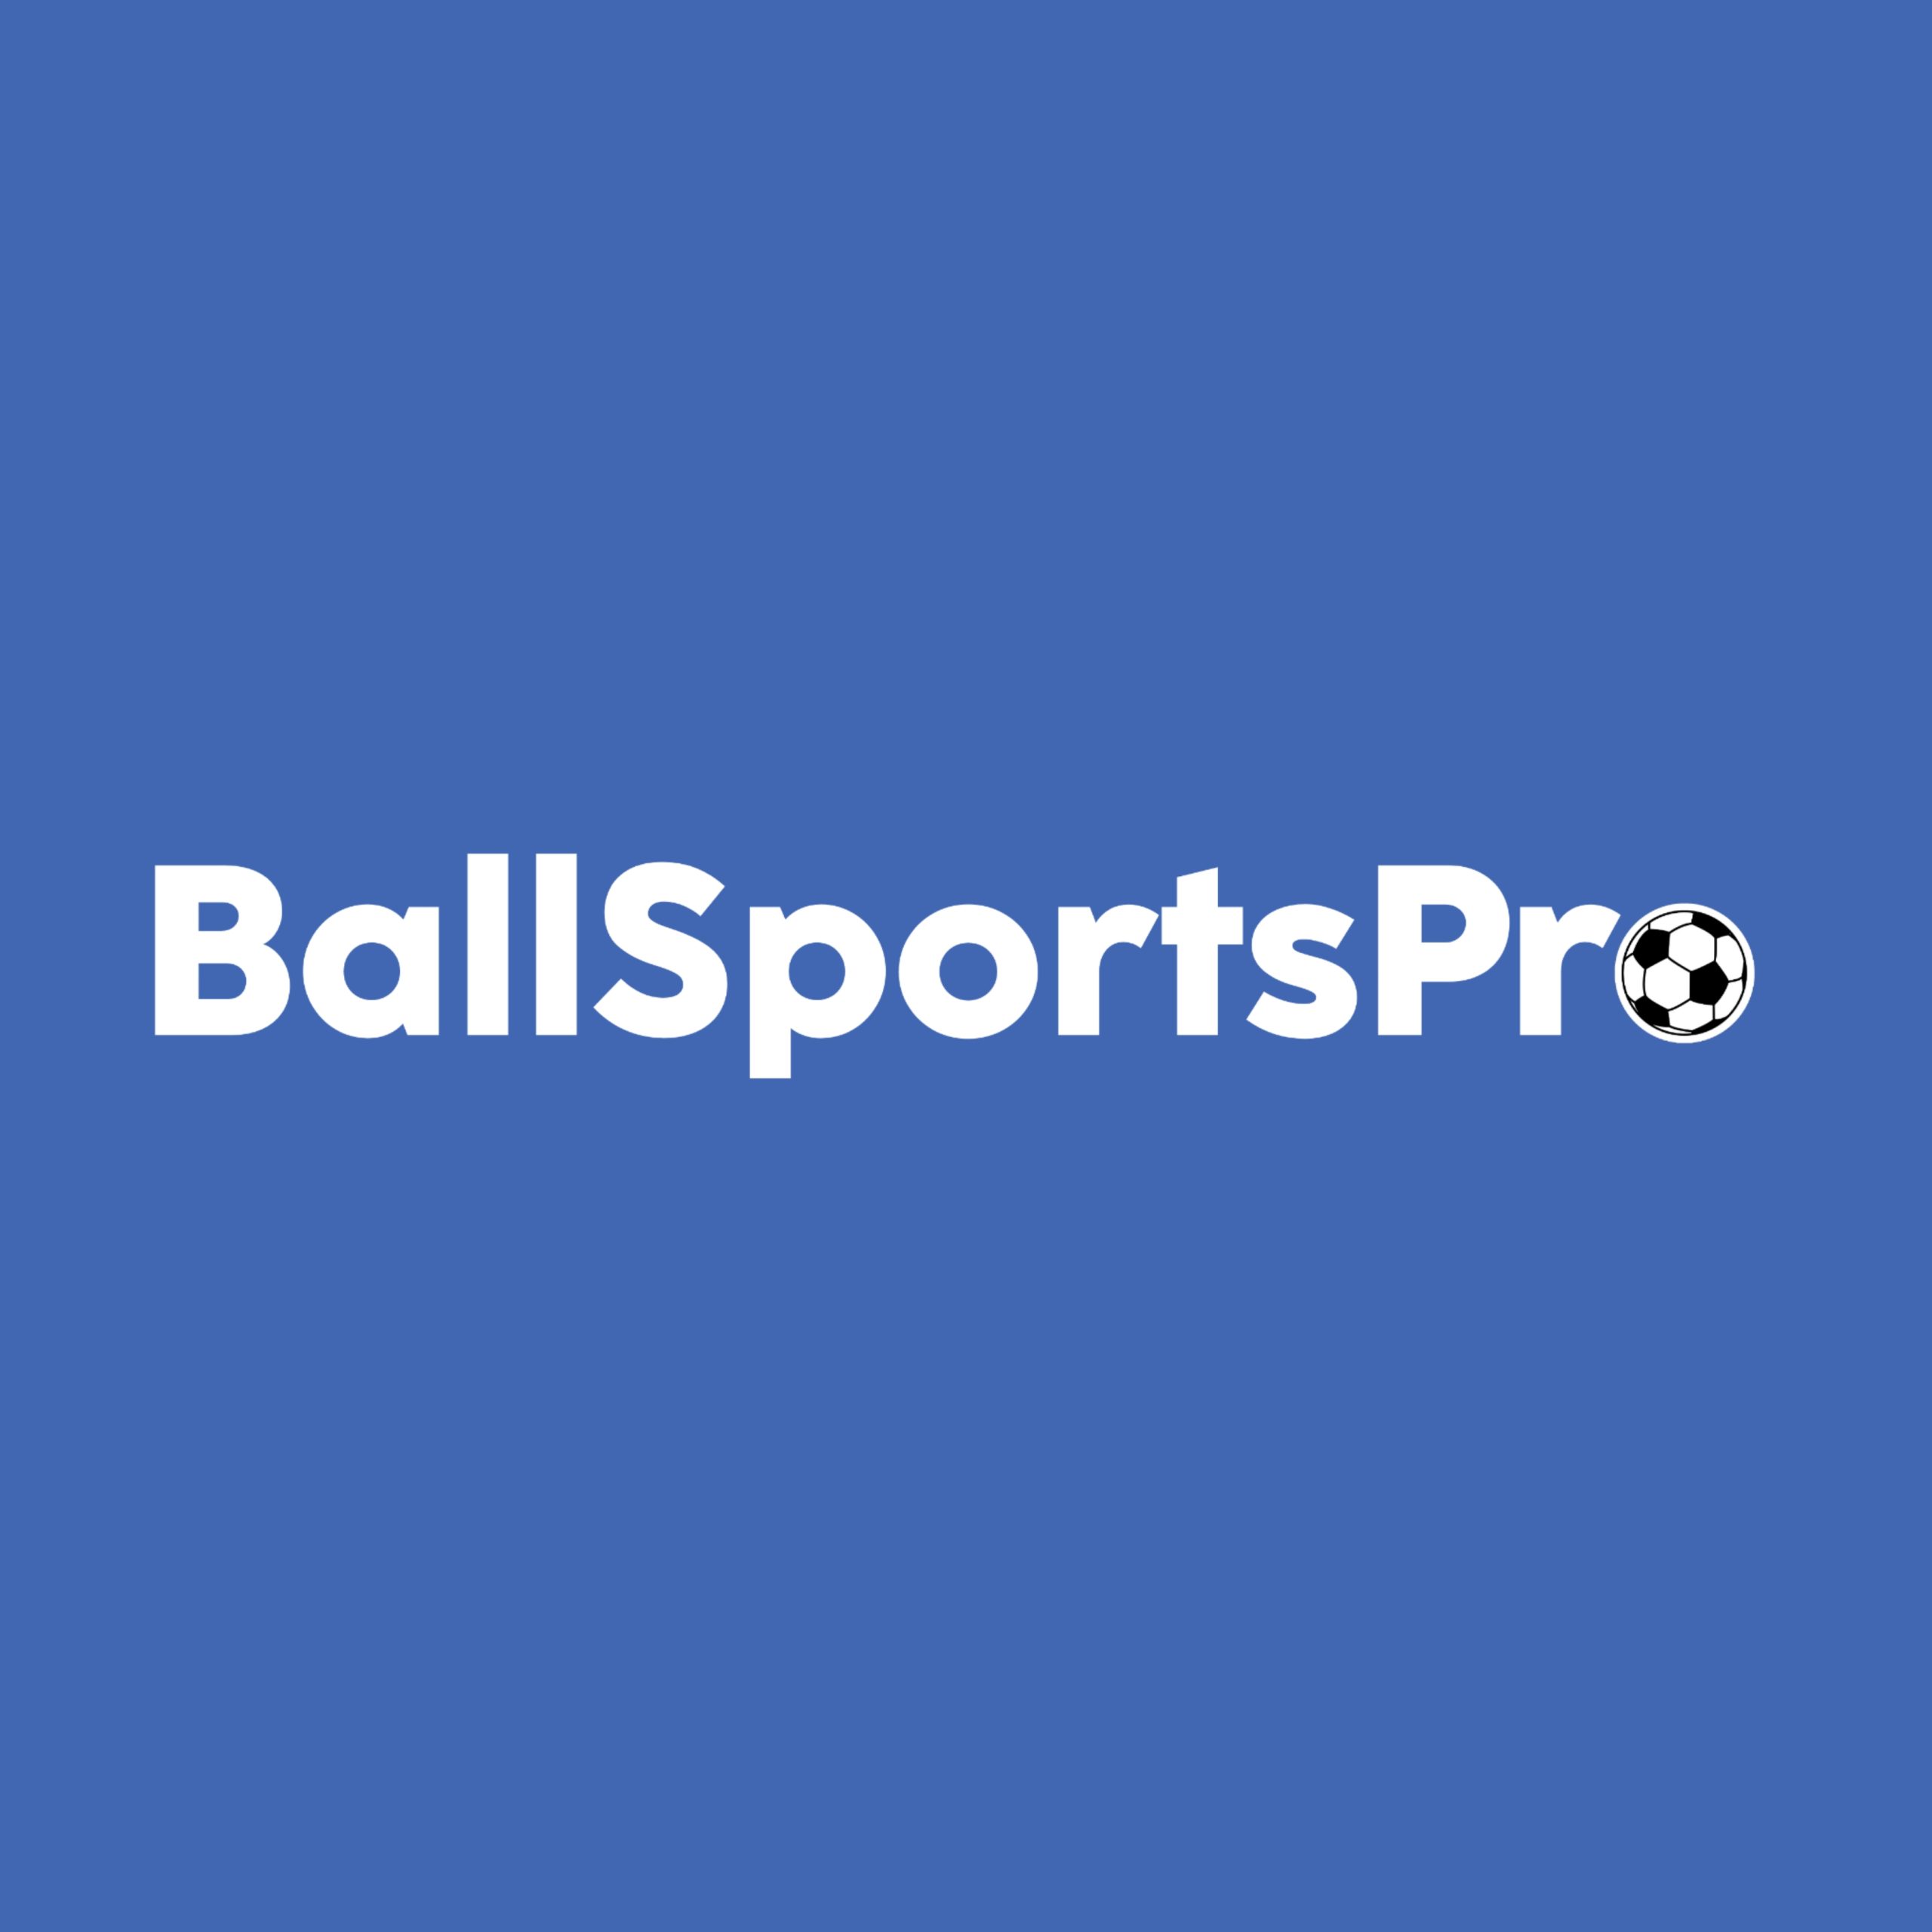 (c) Ballsportspro.com